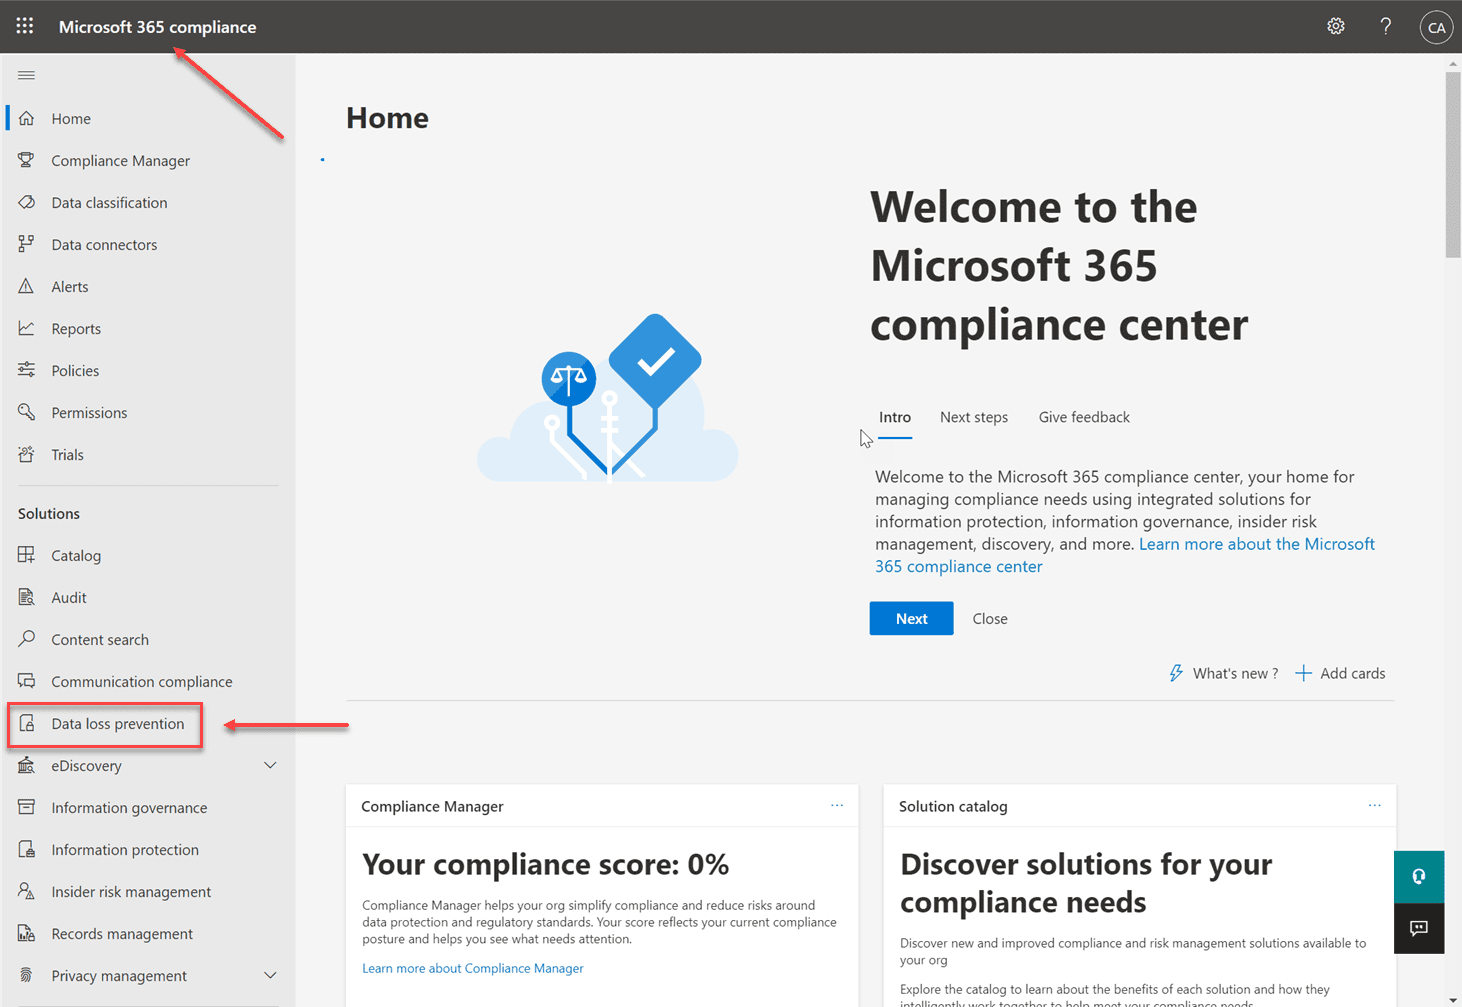 Microsoft 365 Compliance Center